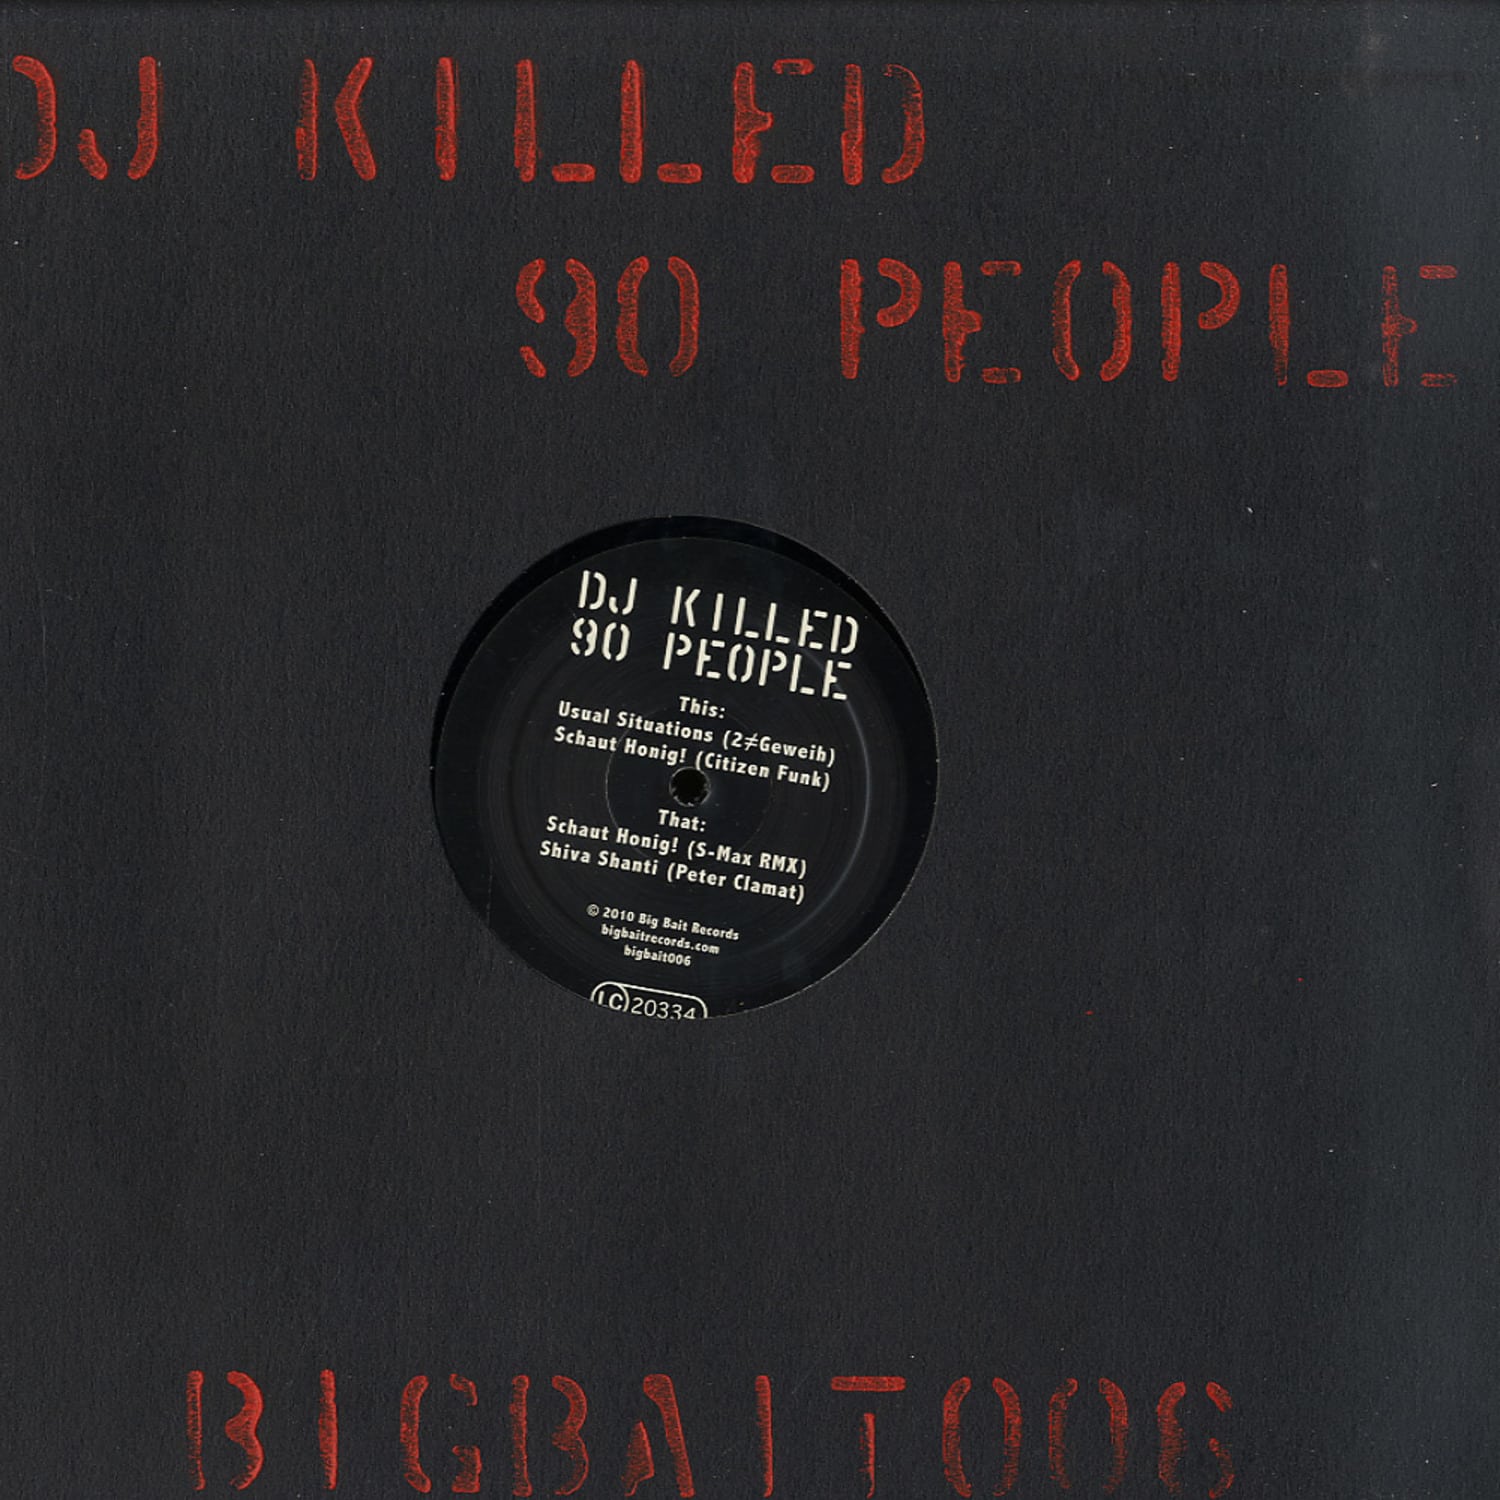 S-Max, Peter Clamat, Citizen Funk - 2 = GEWEIH - DJ KILLED 90 PEOPLE